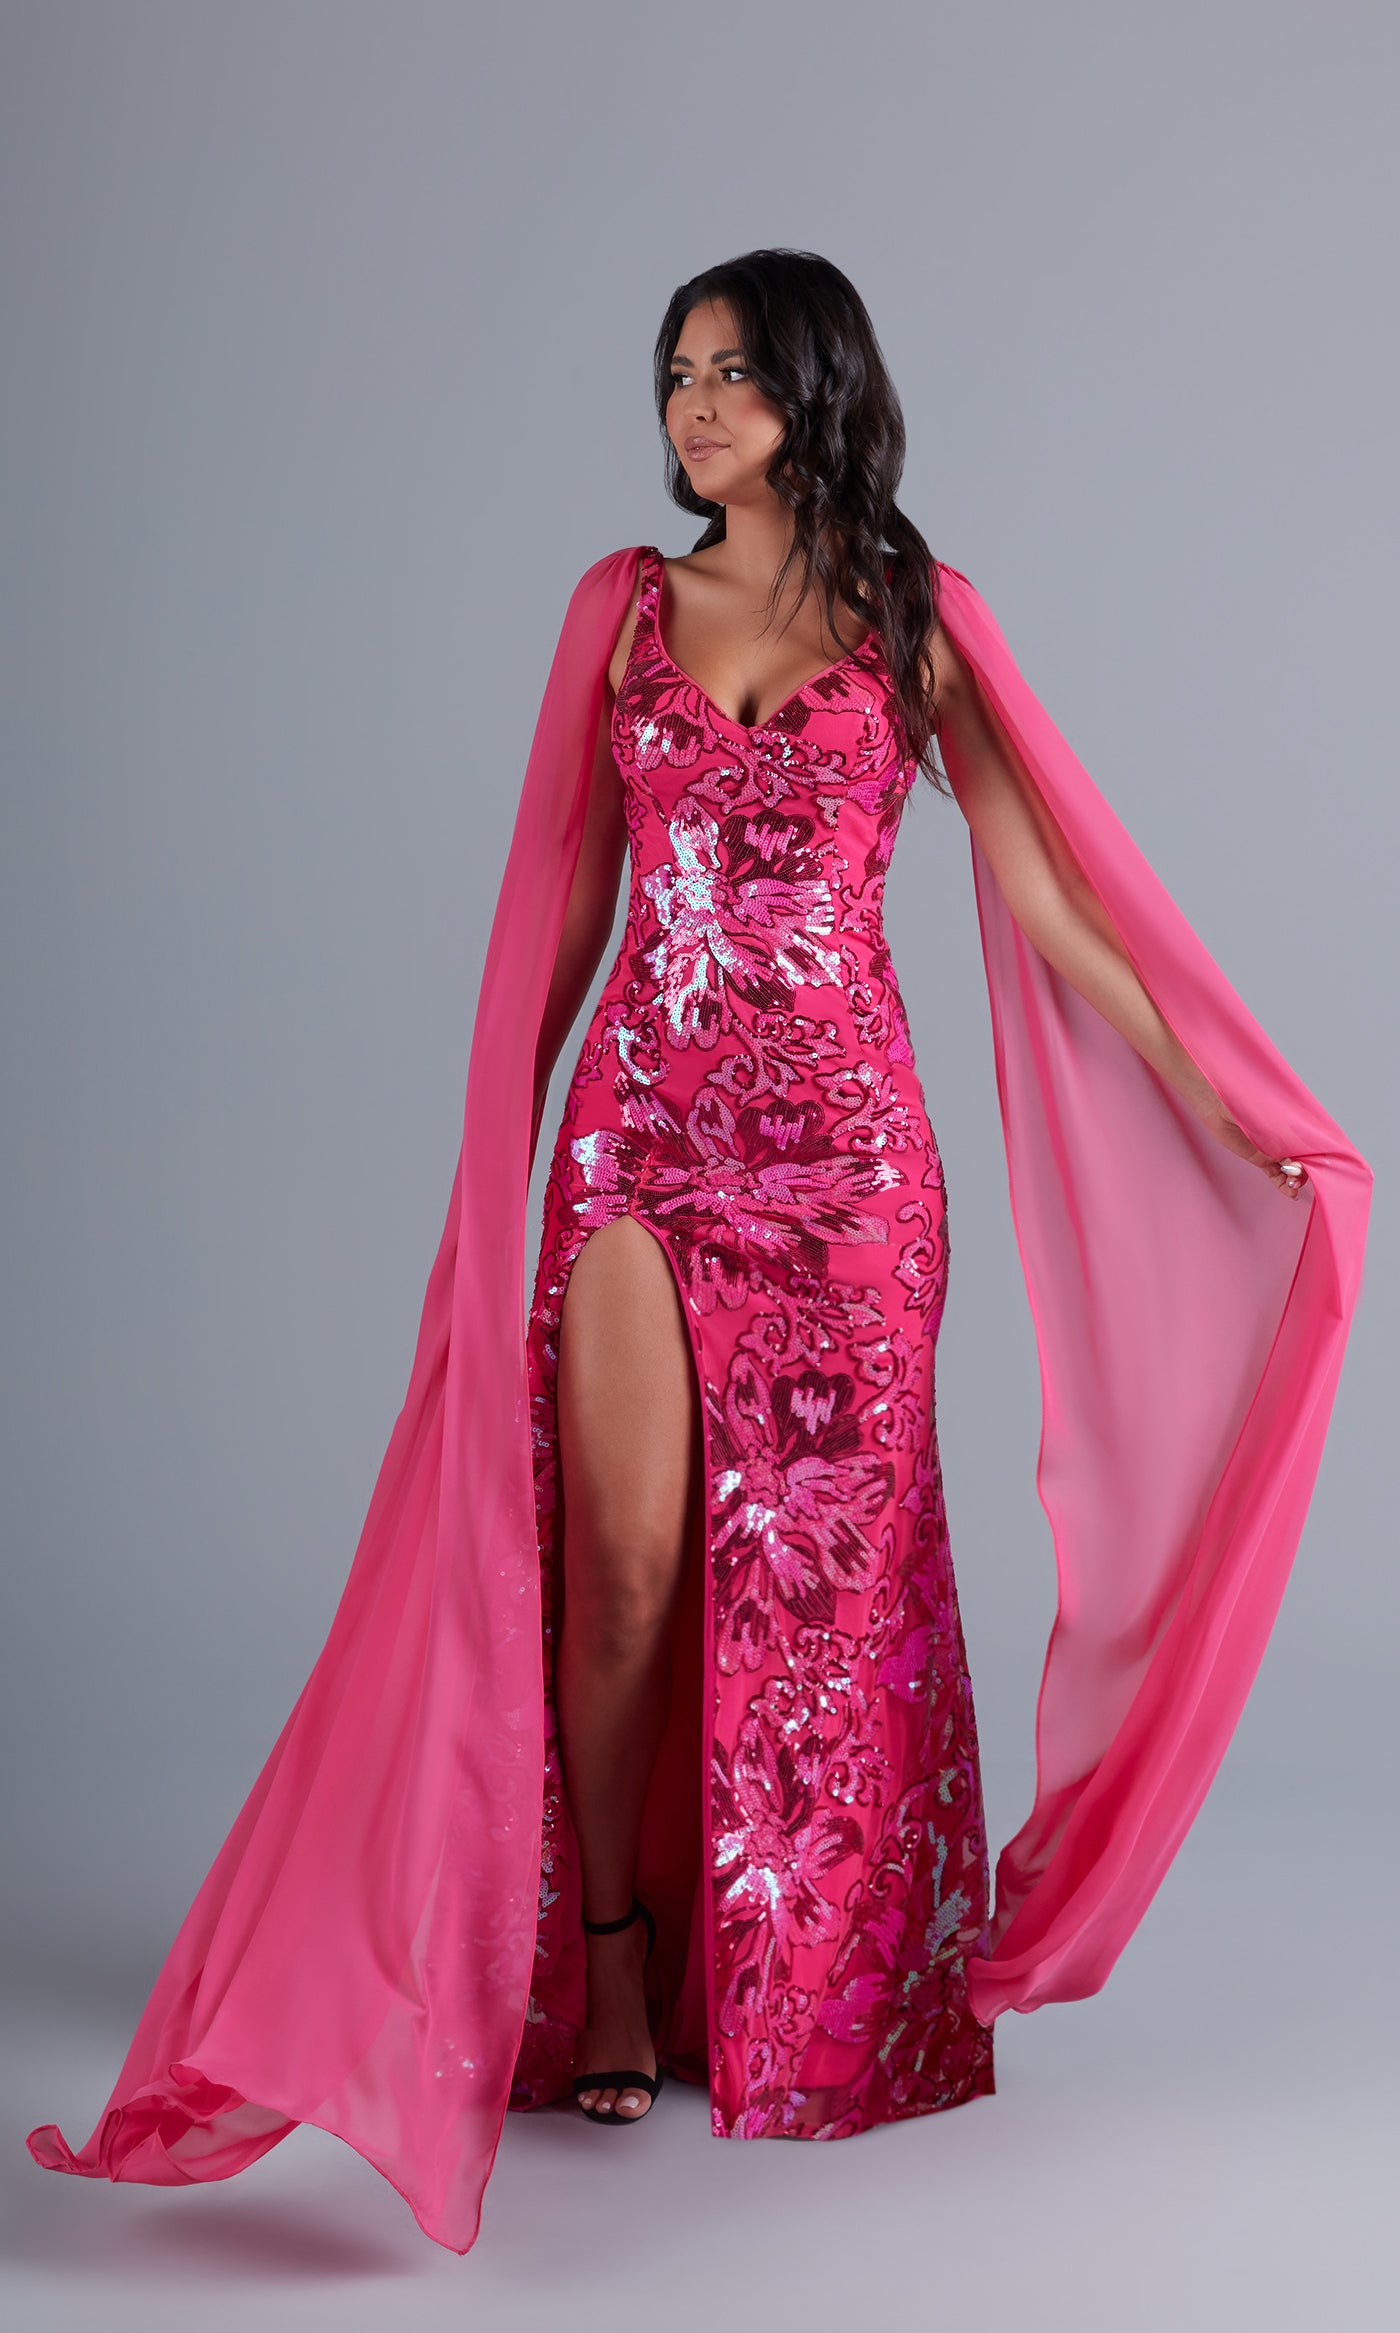 Hot Pink Long Sequin Formal Dress with Shoulder Capes